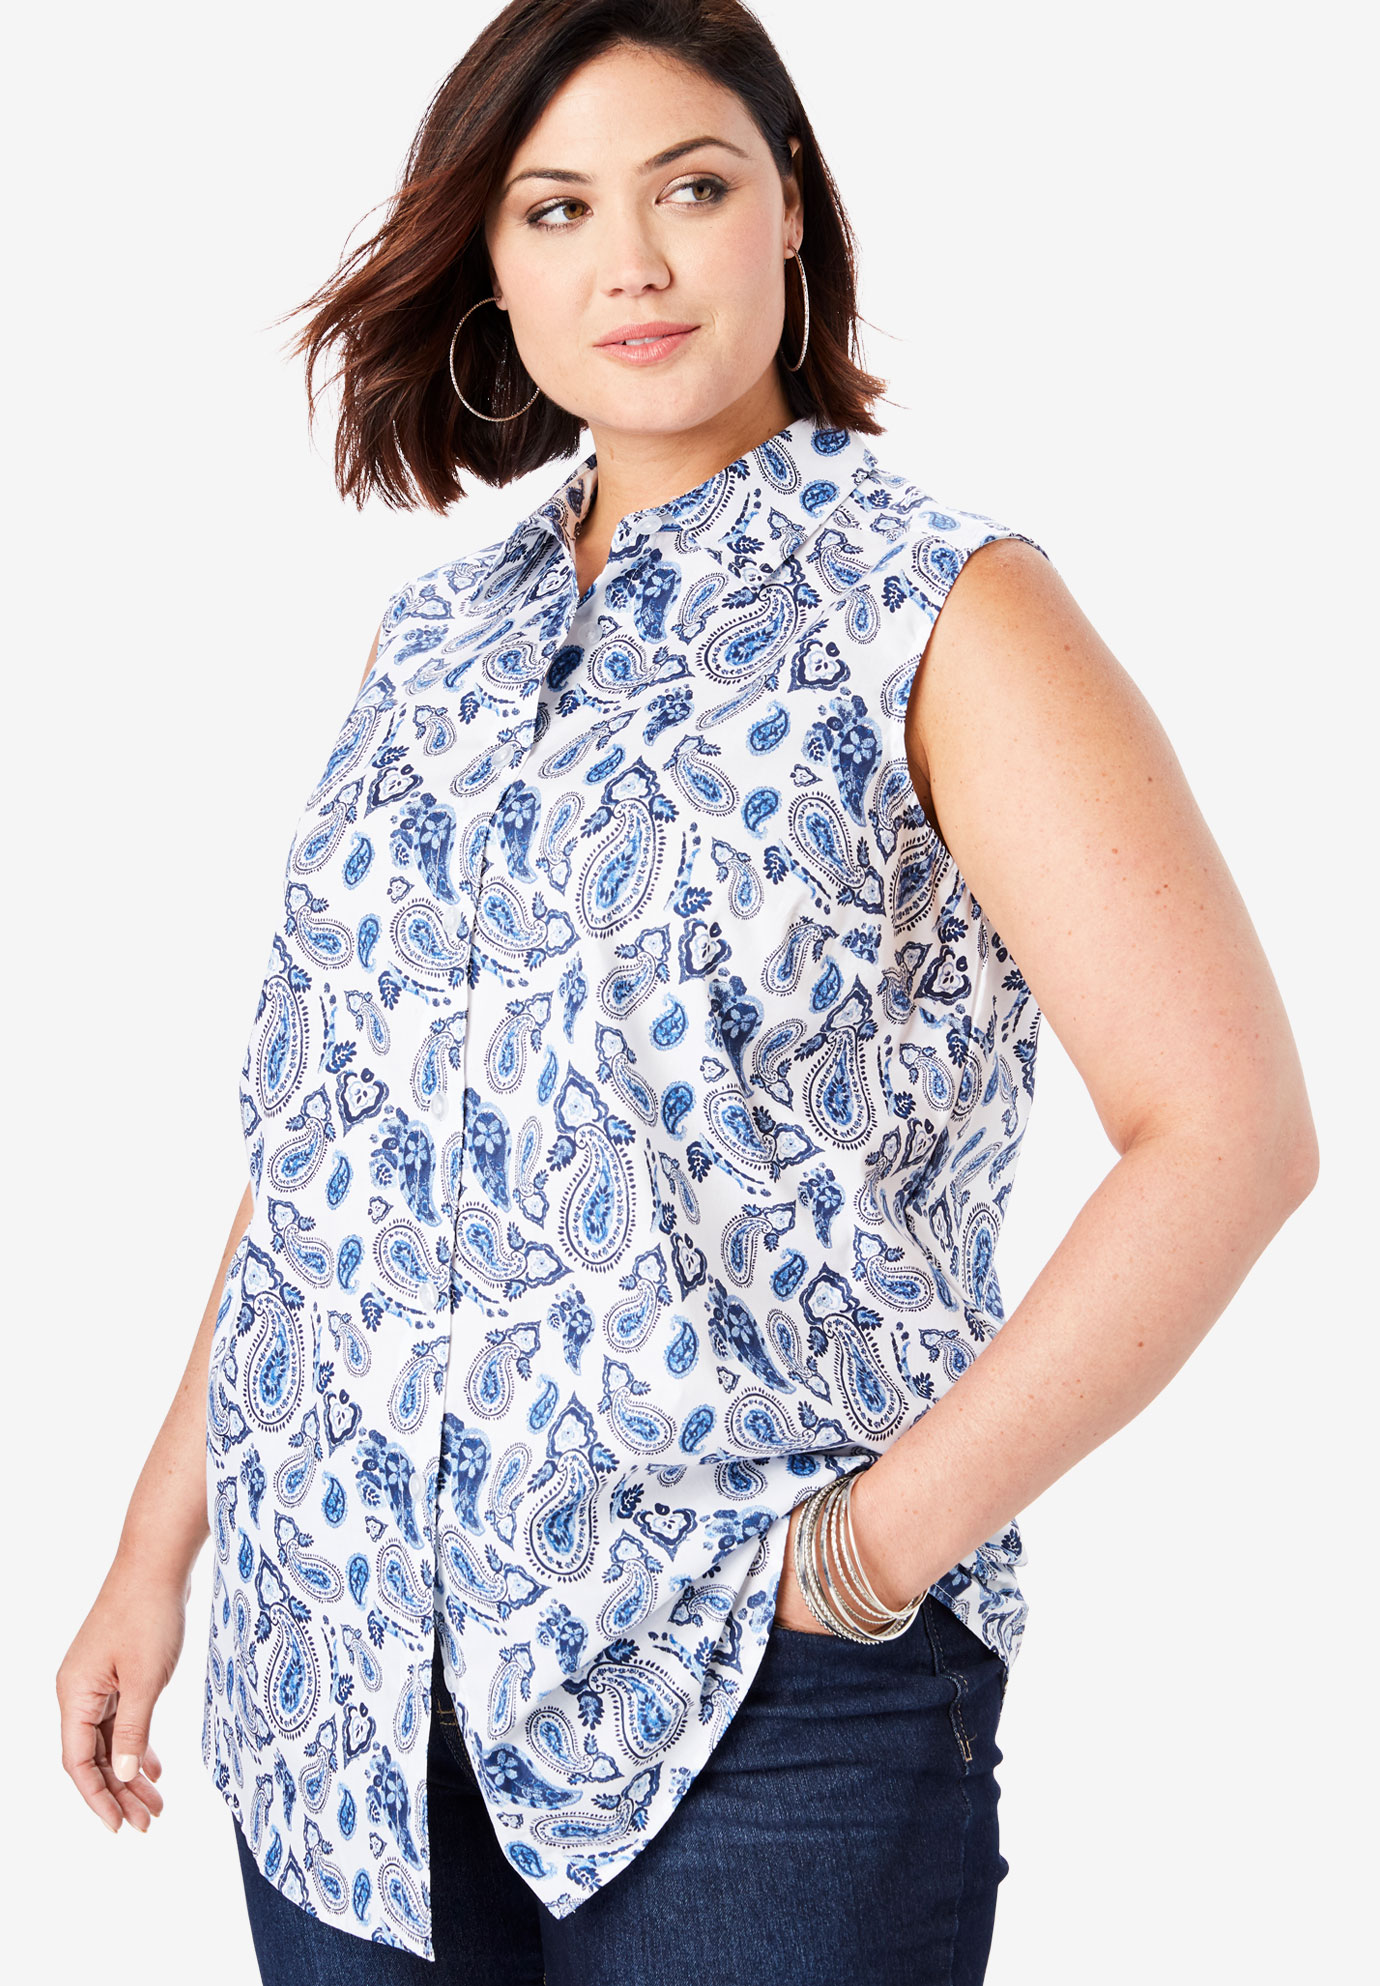 Kate Sleeveless Shirt| Plus Size Blouses & Shirts | Roaman's